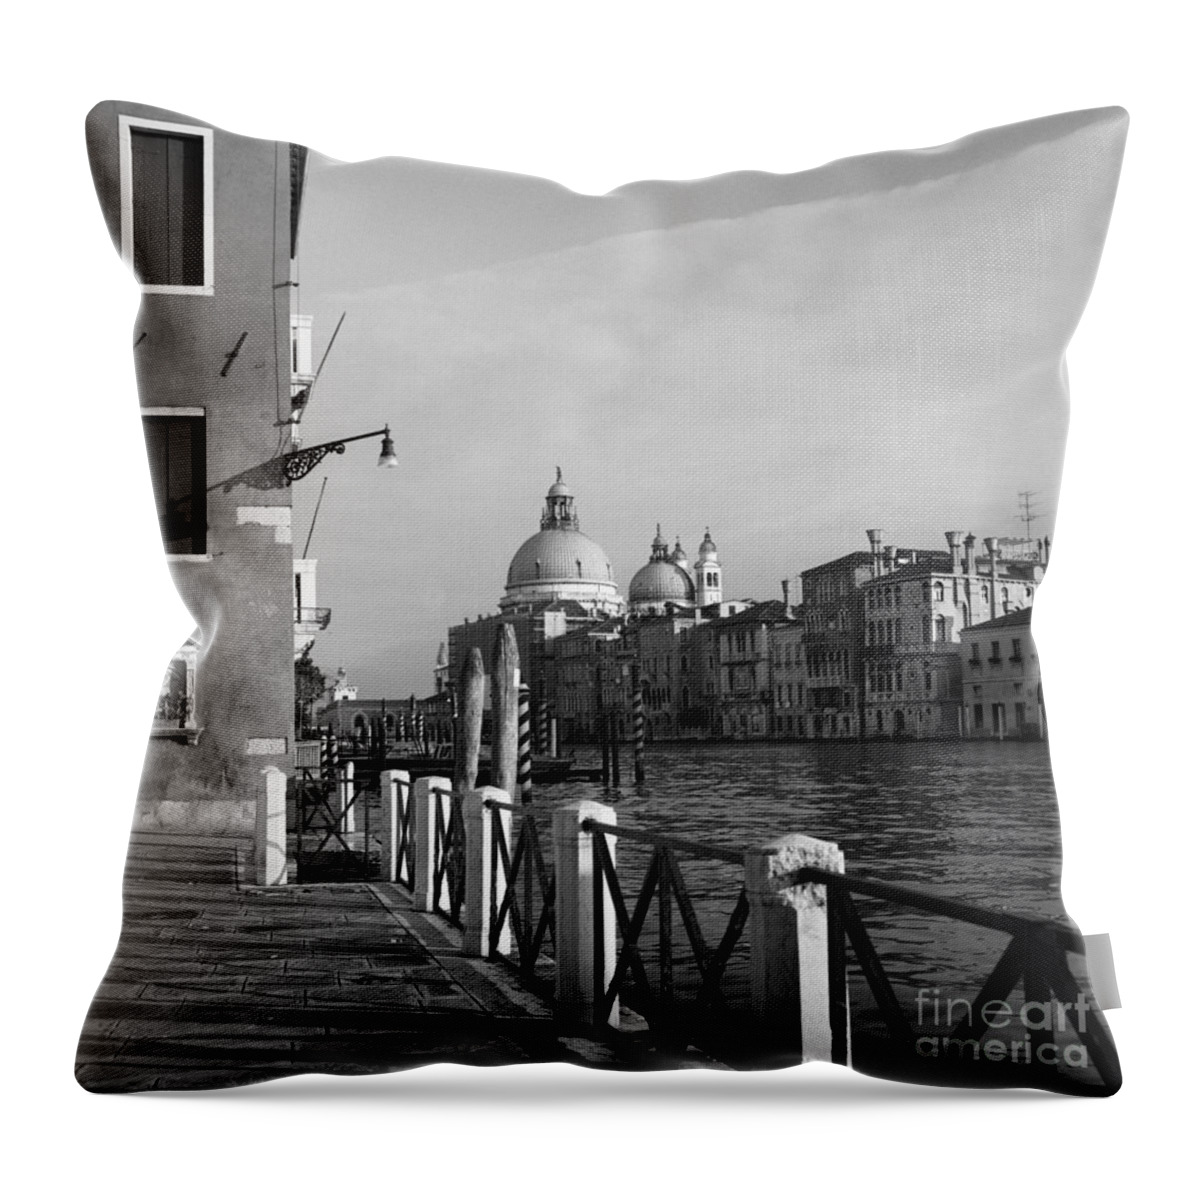 Venezia Throw Pillow featuring the photograph Venezia Canal Grande by Riccardo Mottola